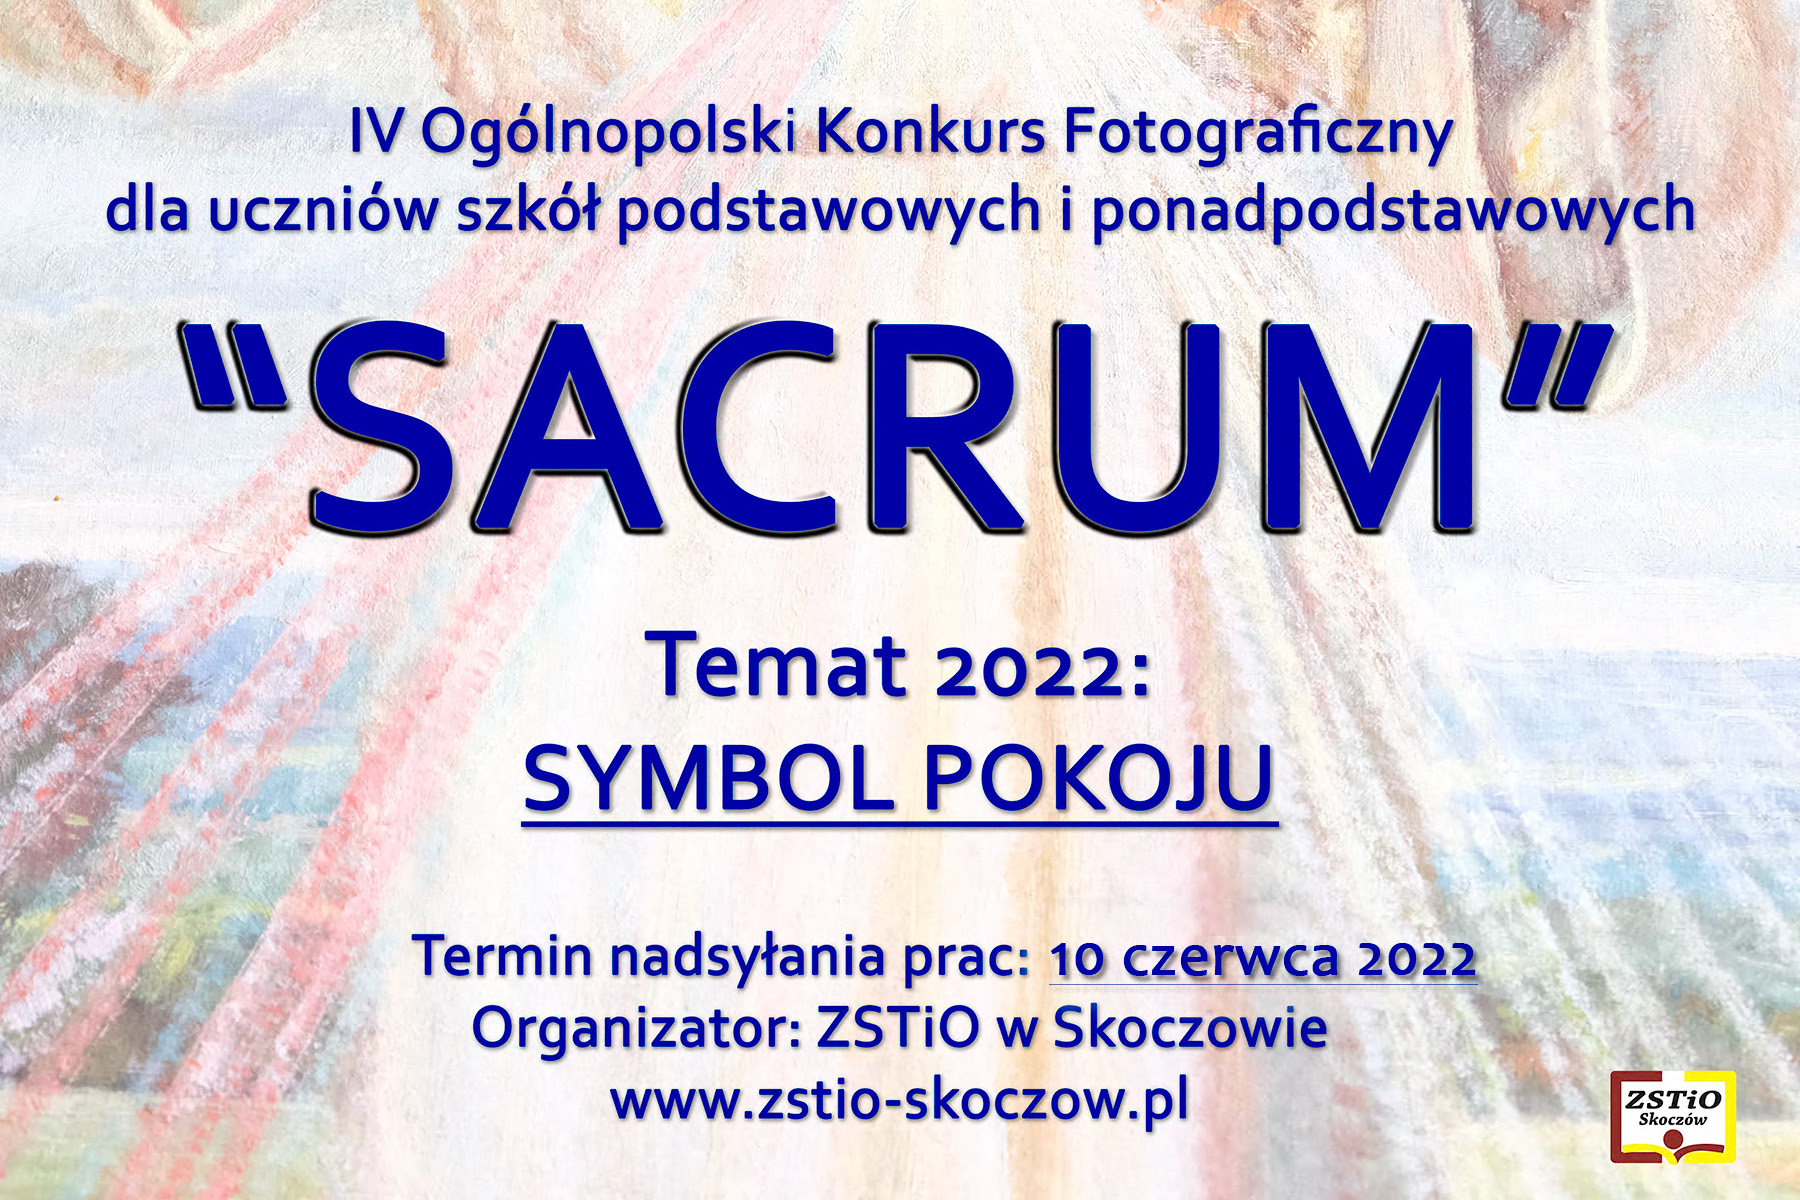 plakat sacrum 2022 symbol pokoju